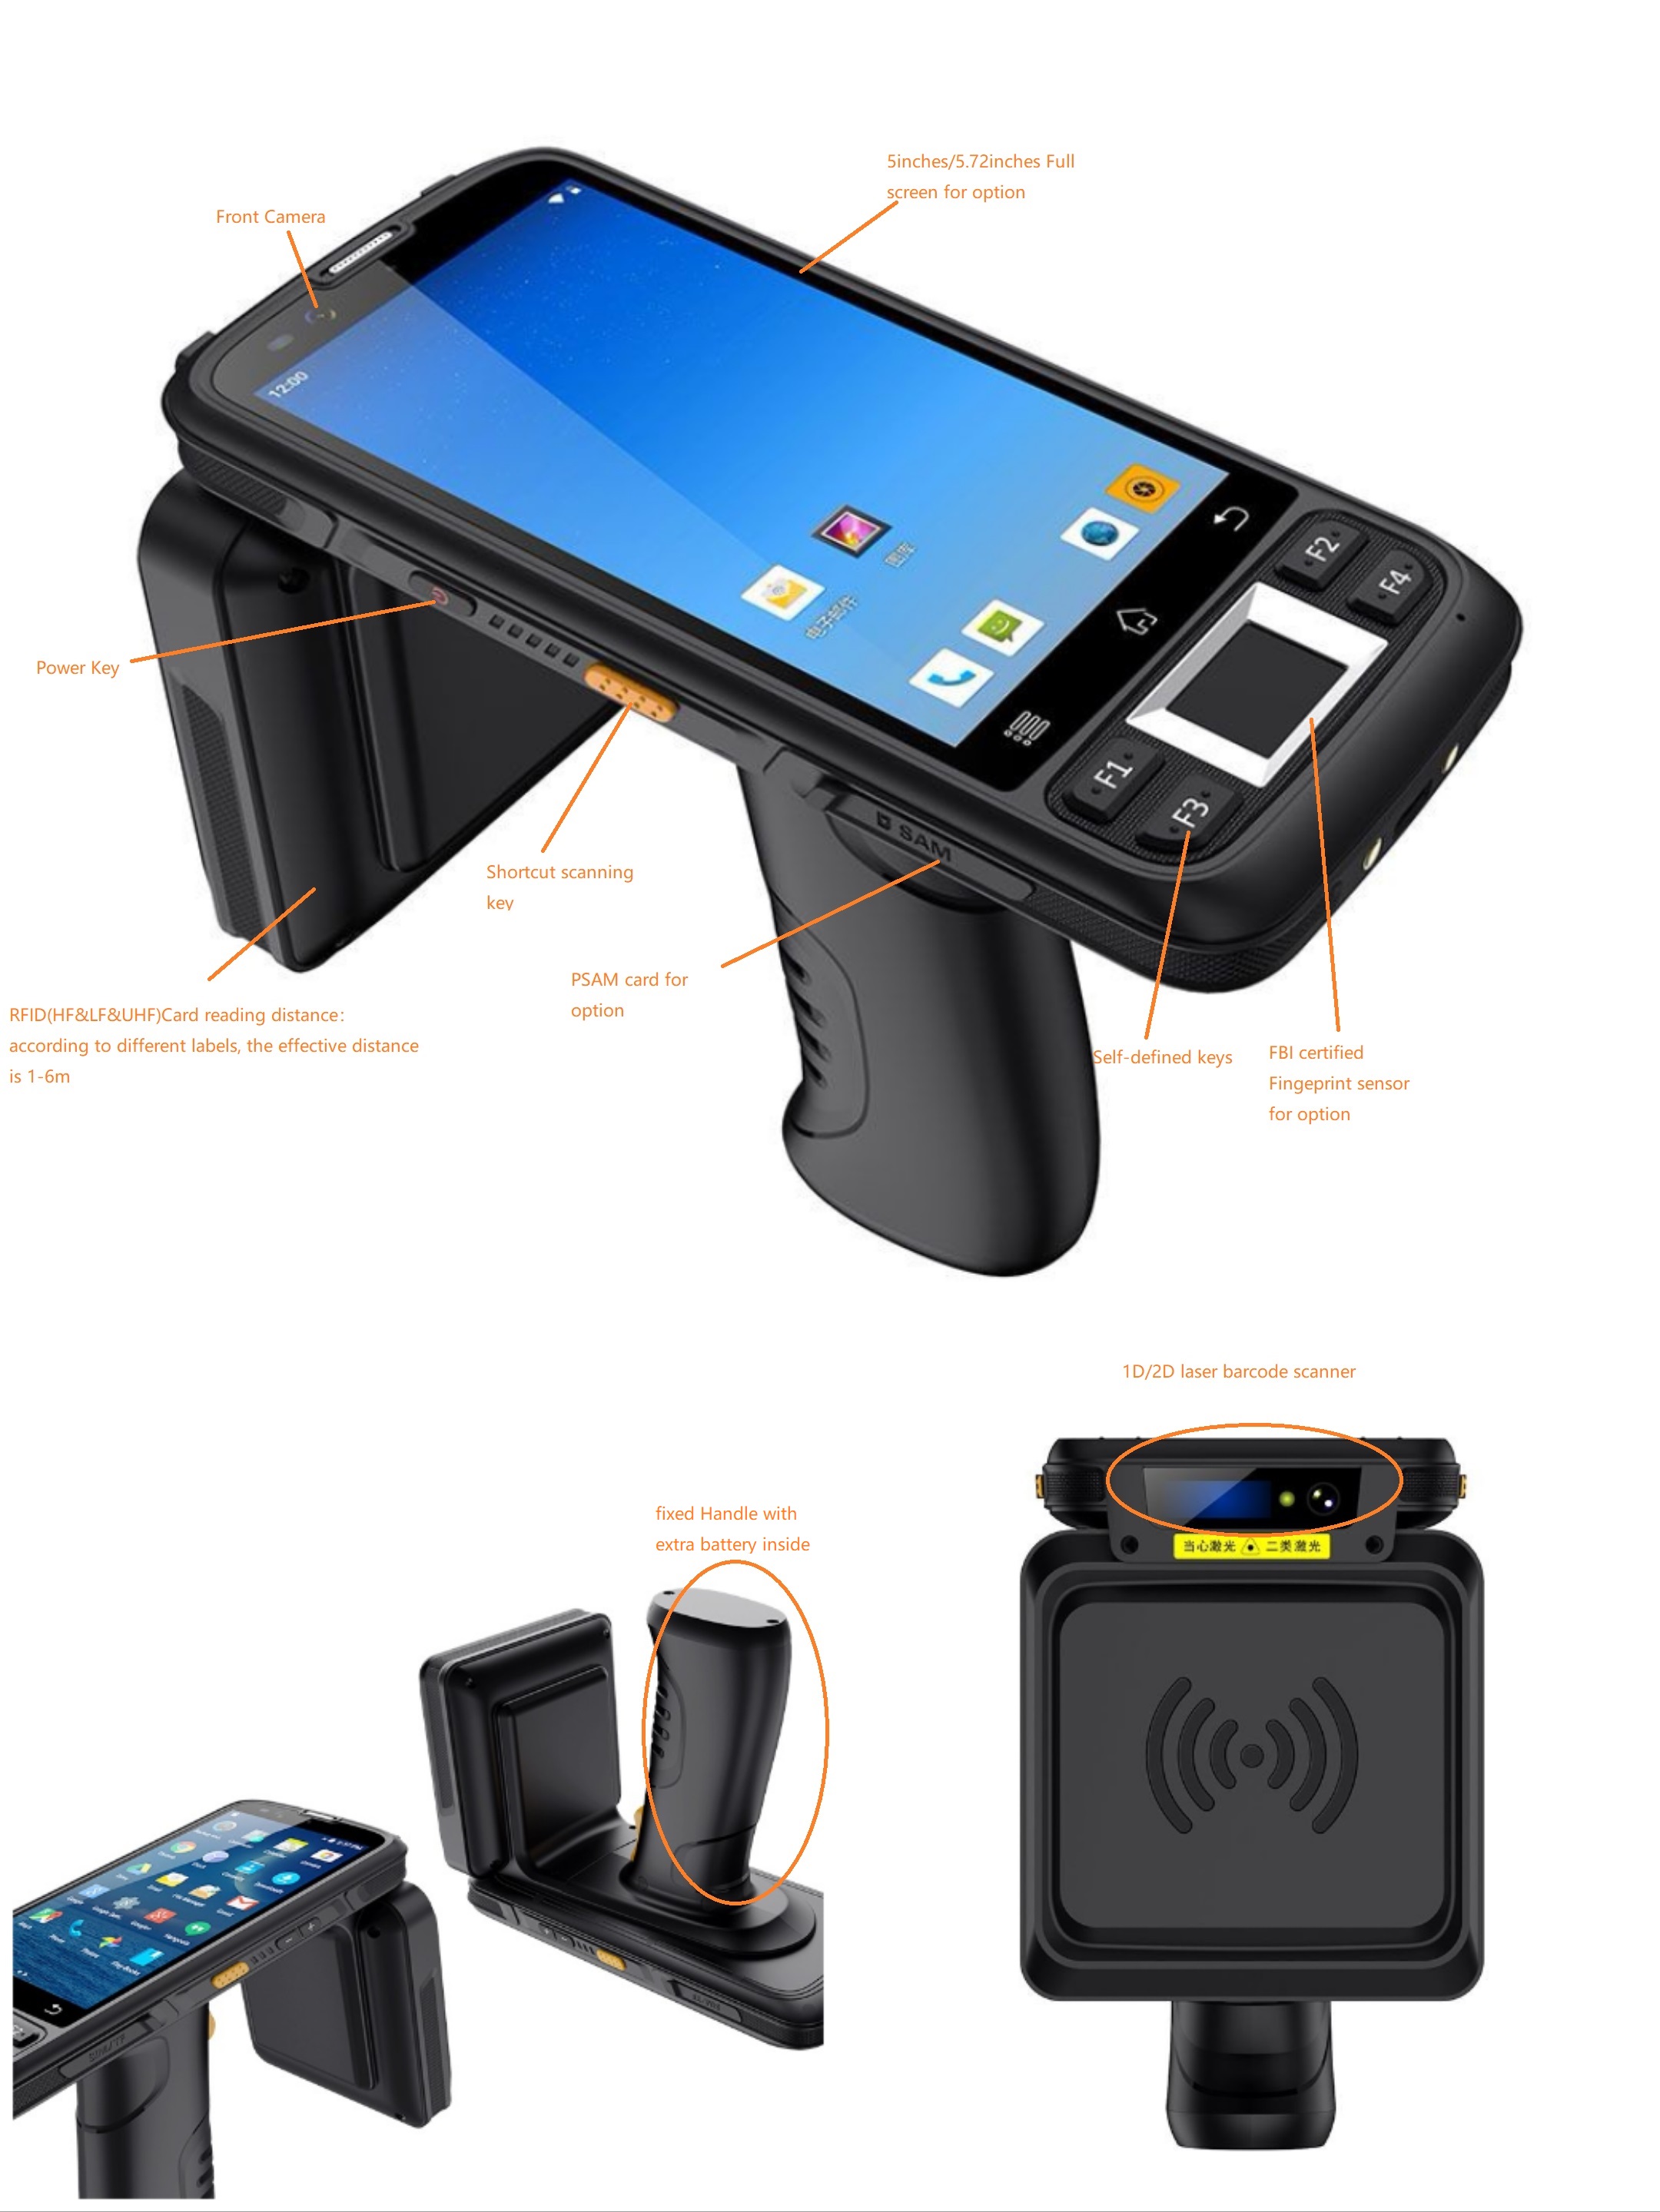 SFT Biometric IRIS Fingerprint and Palm Vein solution company reanuda el aviso de trabajo